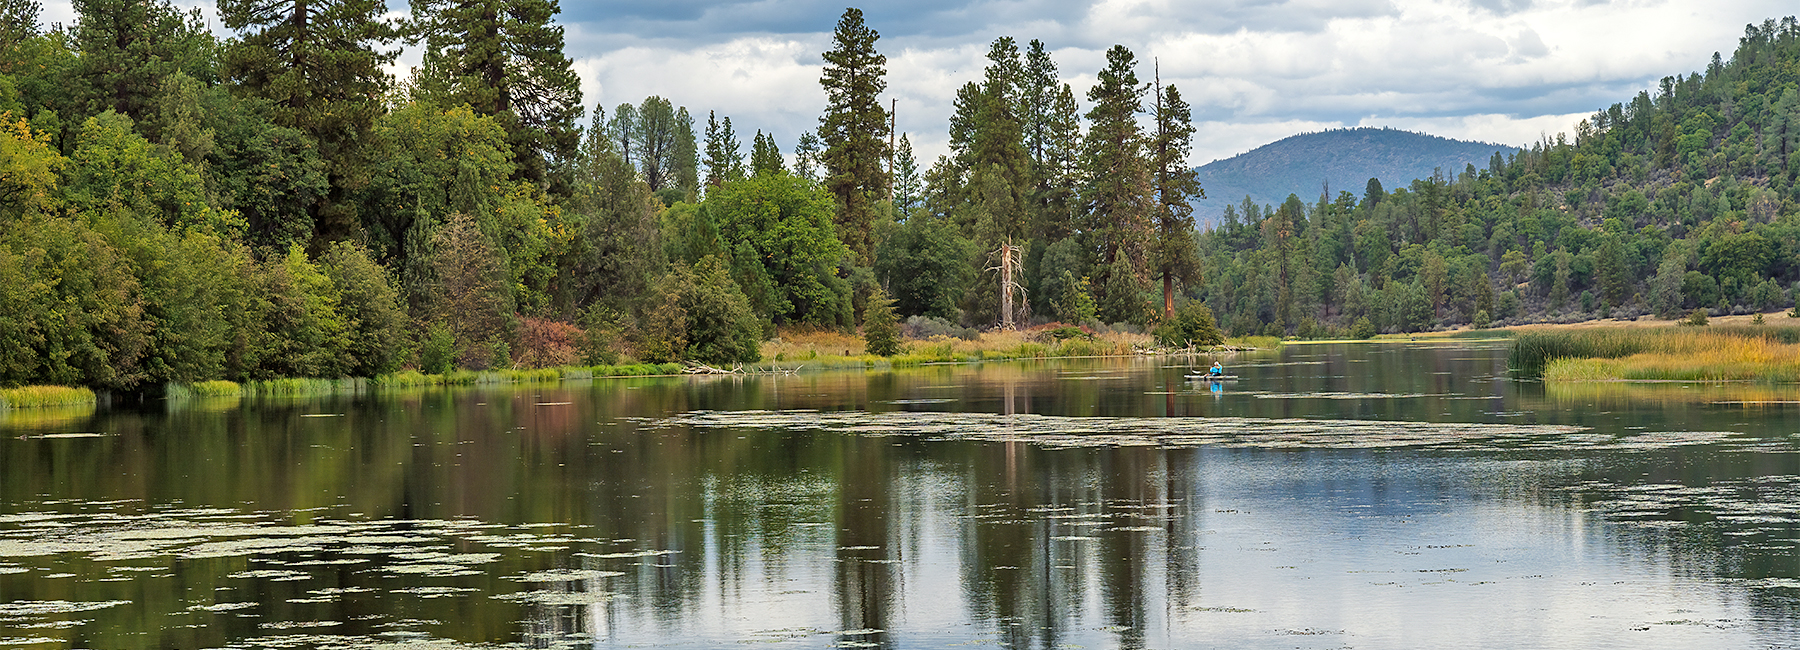 Baum Lake - Nor Cal's Dependable Gem